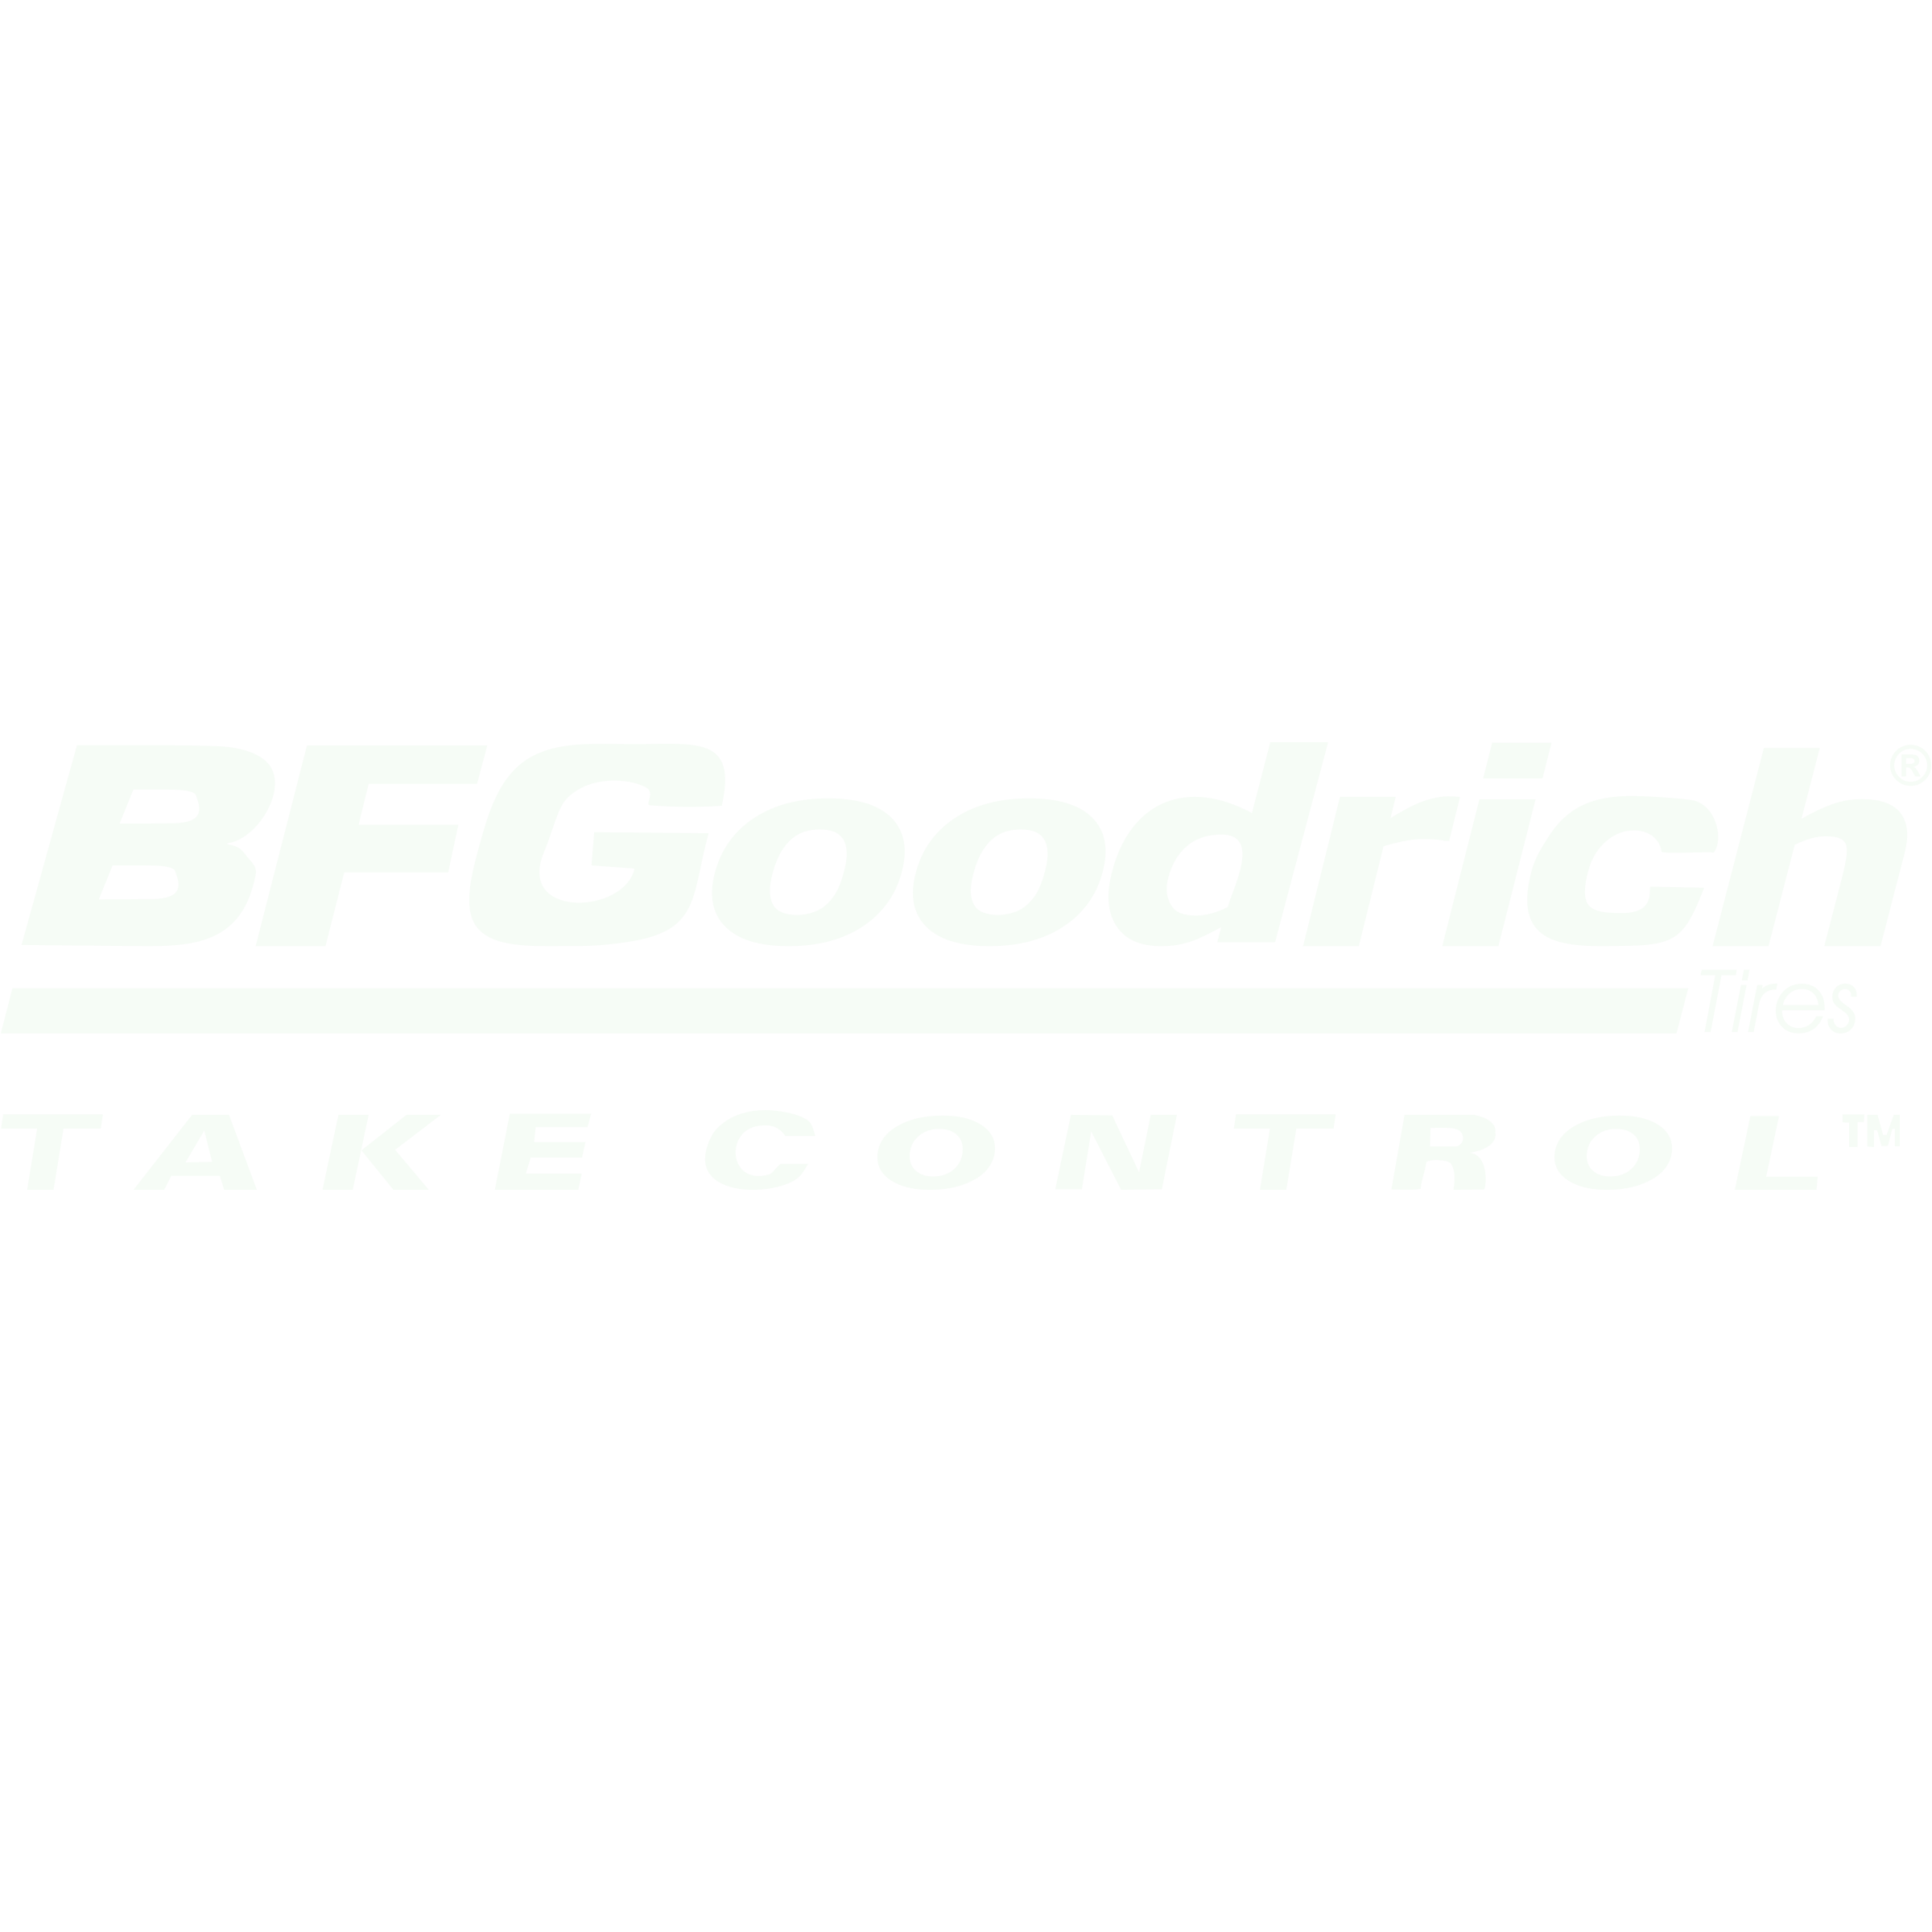 bf-goodrich-logo-png-transparent